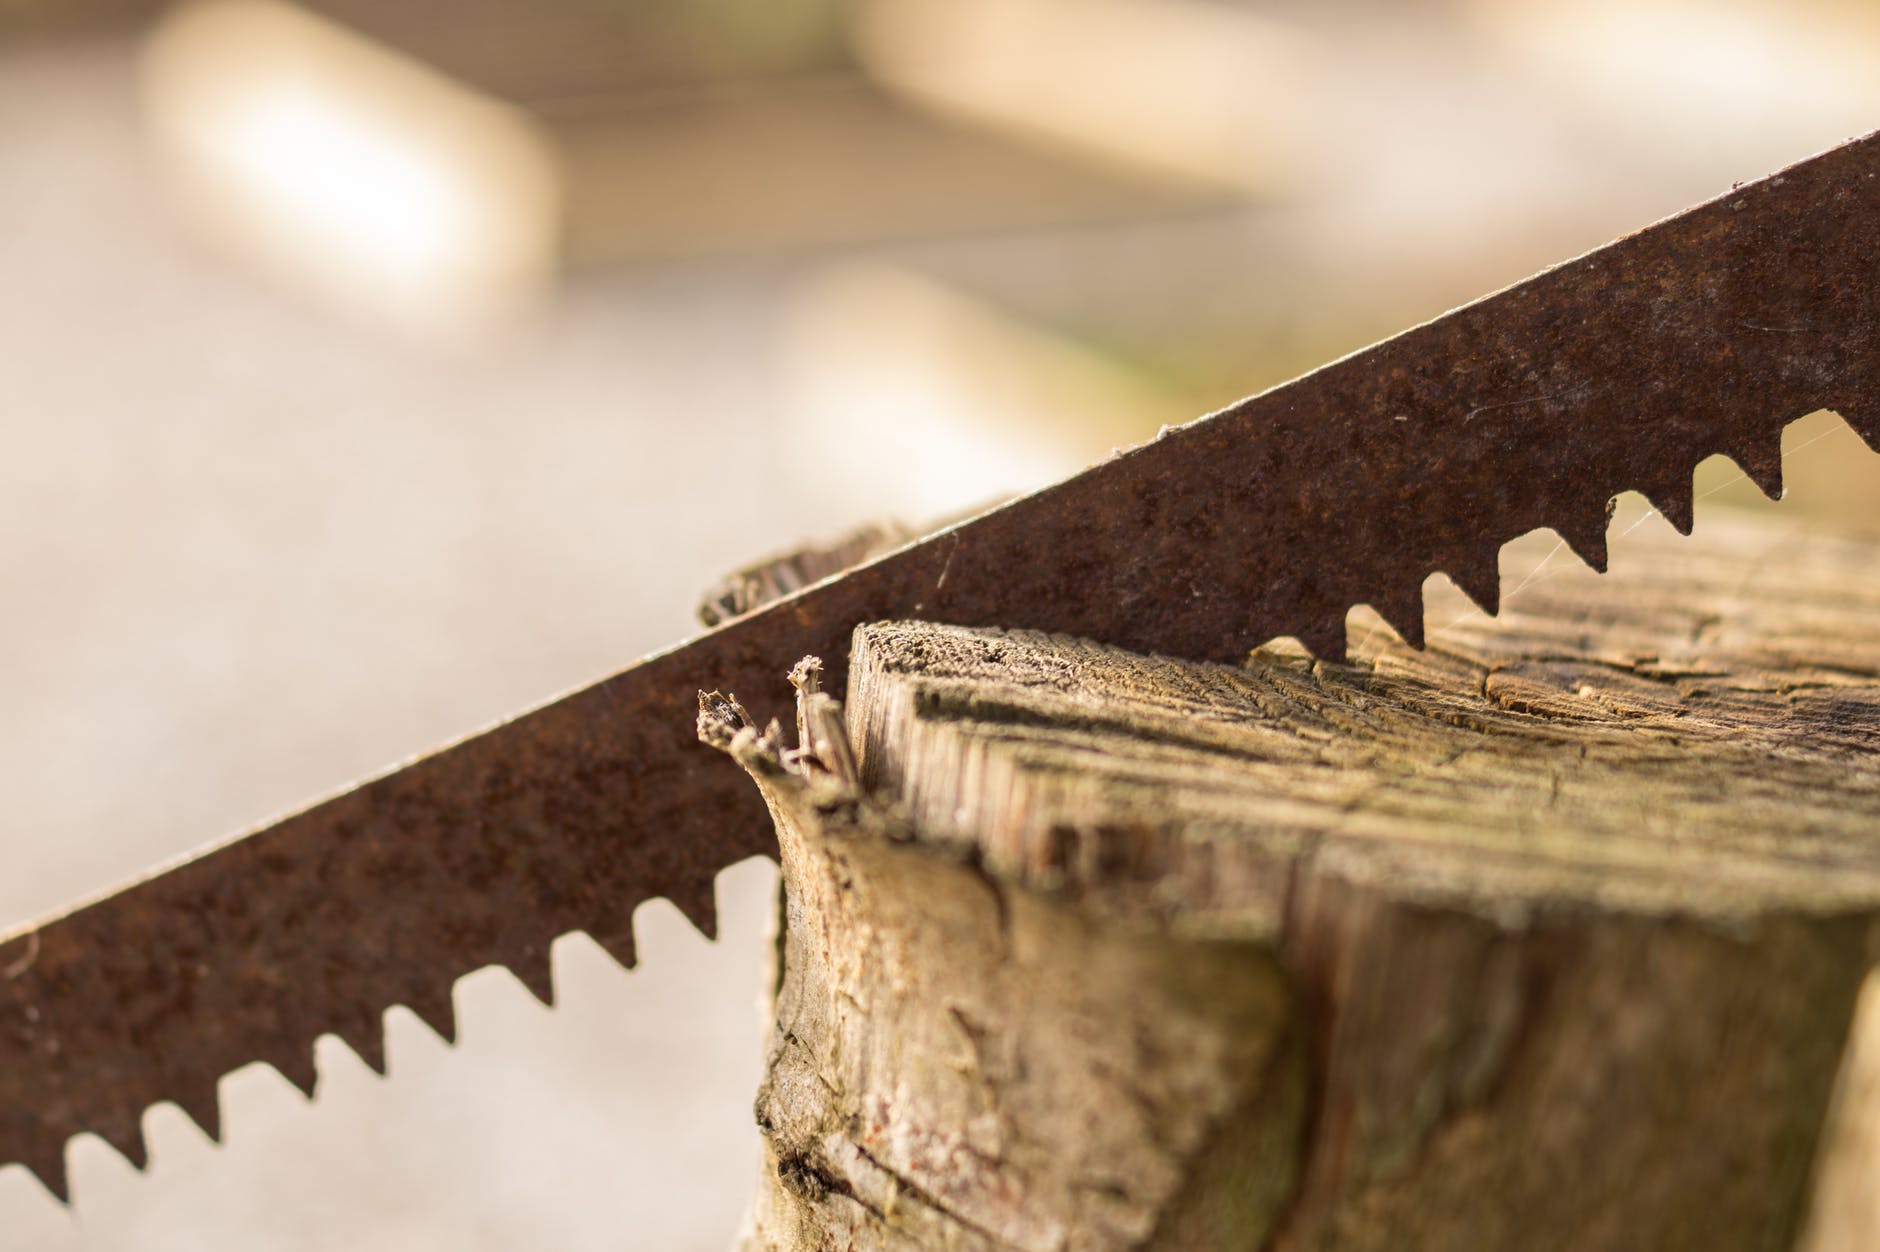 wood tool saw